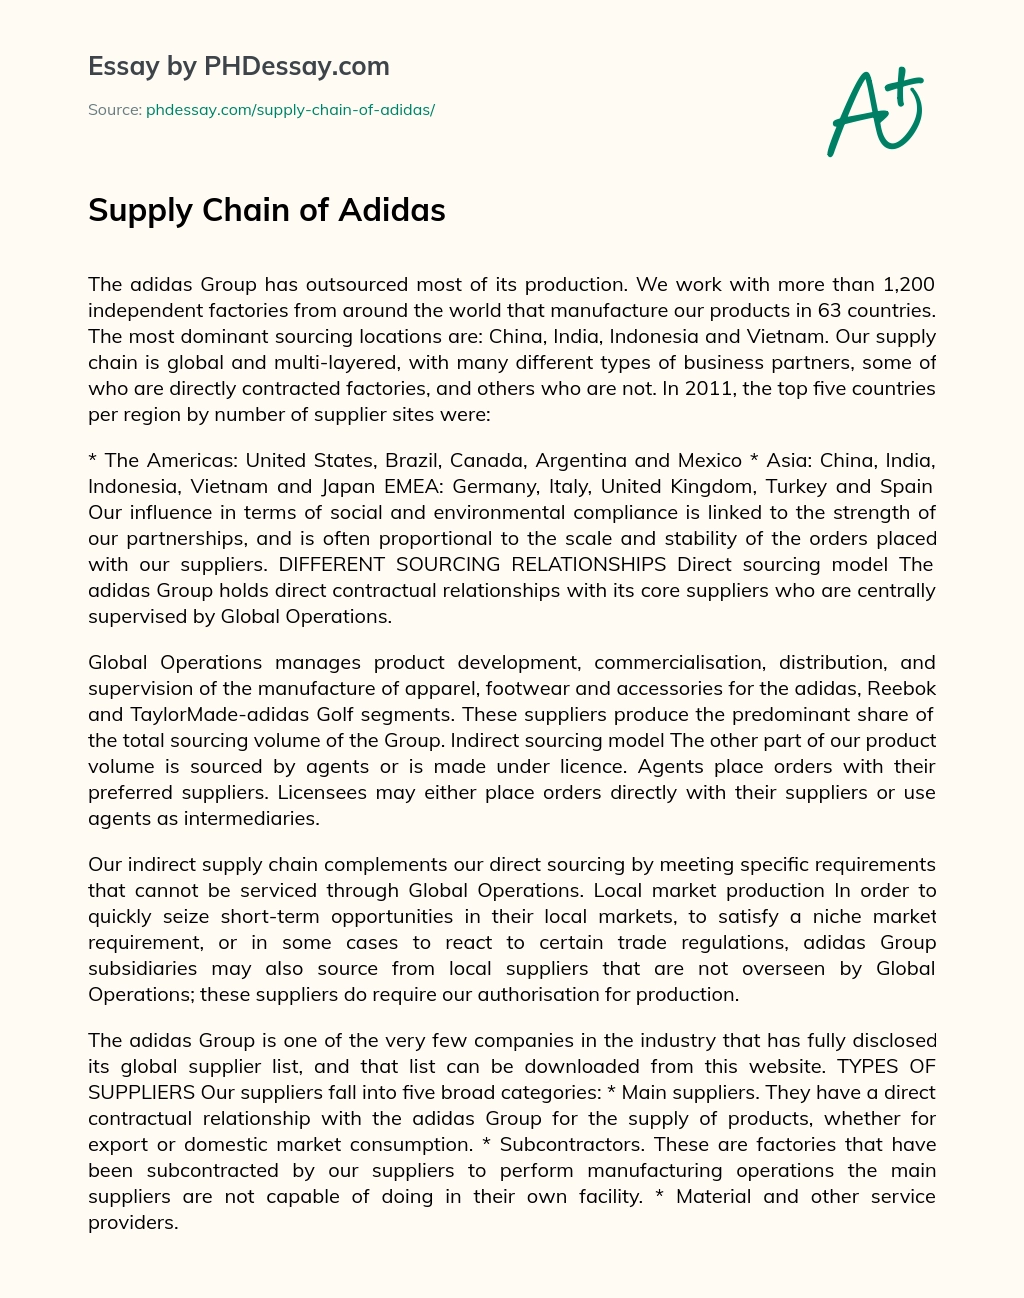 Supply Chain of Adidas essay